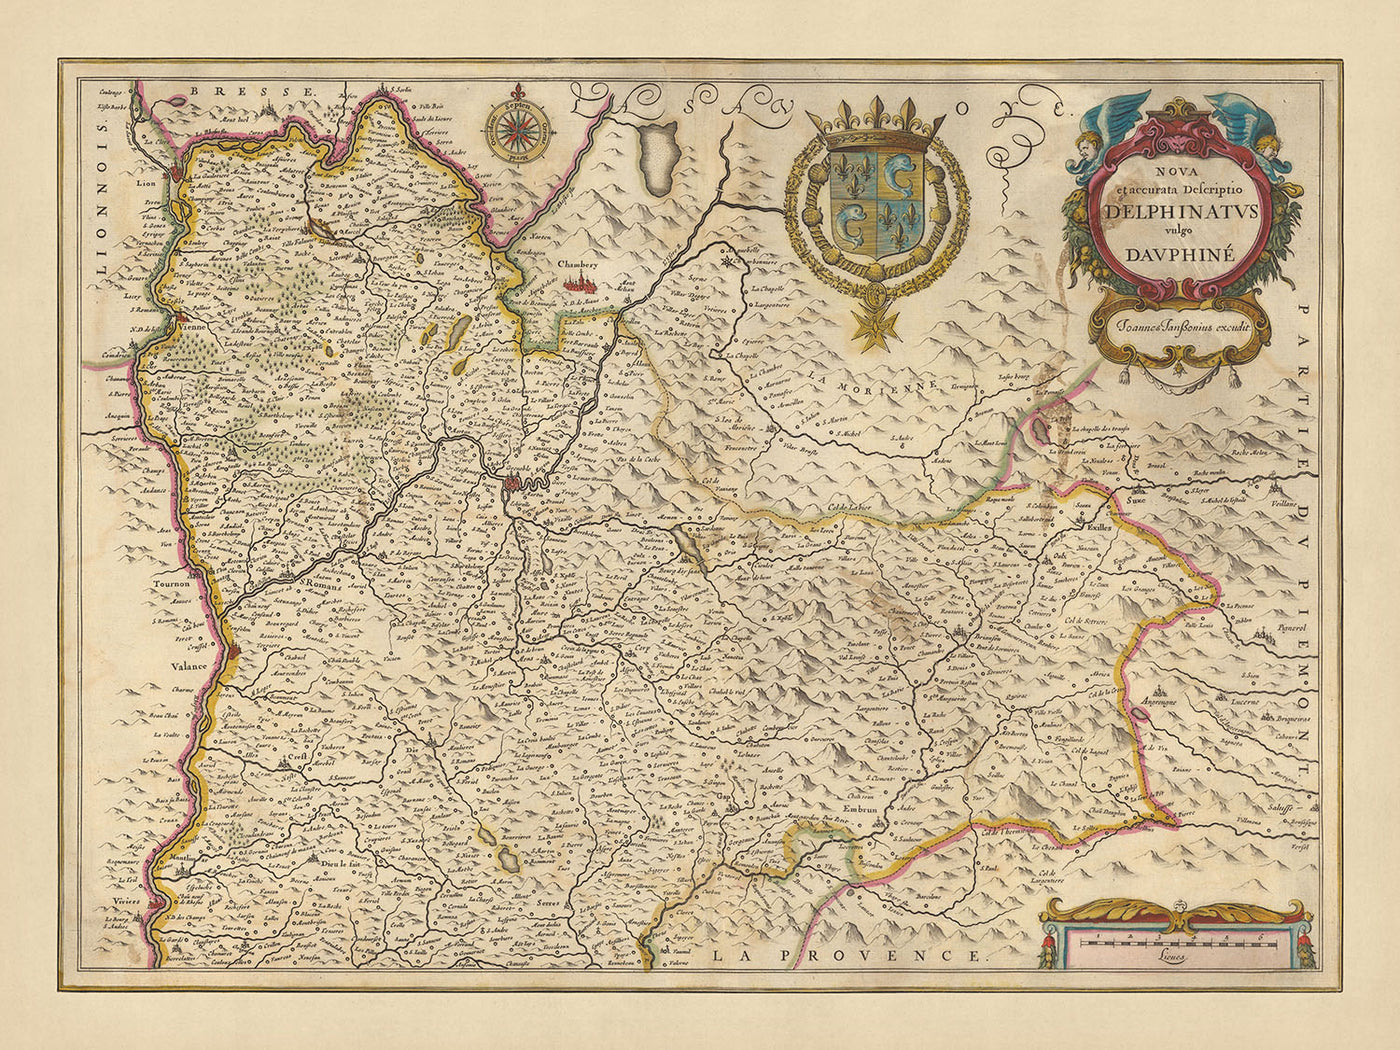 Old Map of Province of Dauphiné by Visscher, 1690: Chambéry, Grenoble, Lyon, Valence, Vanoise National Park